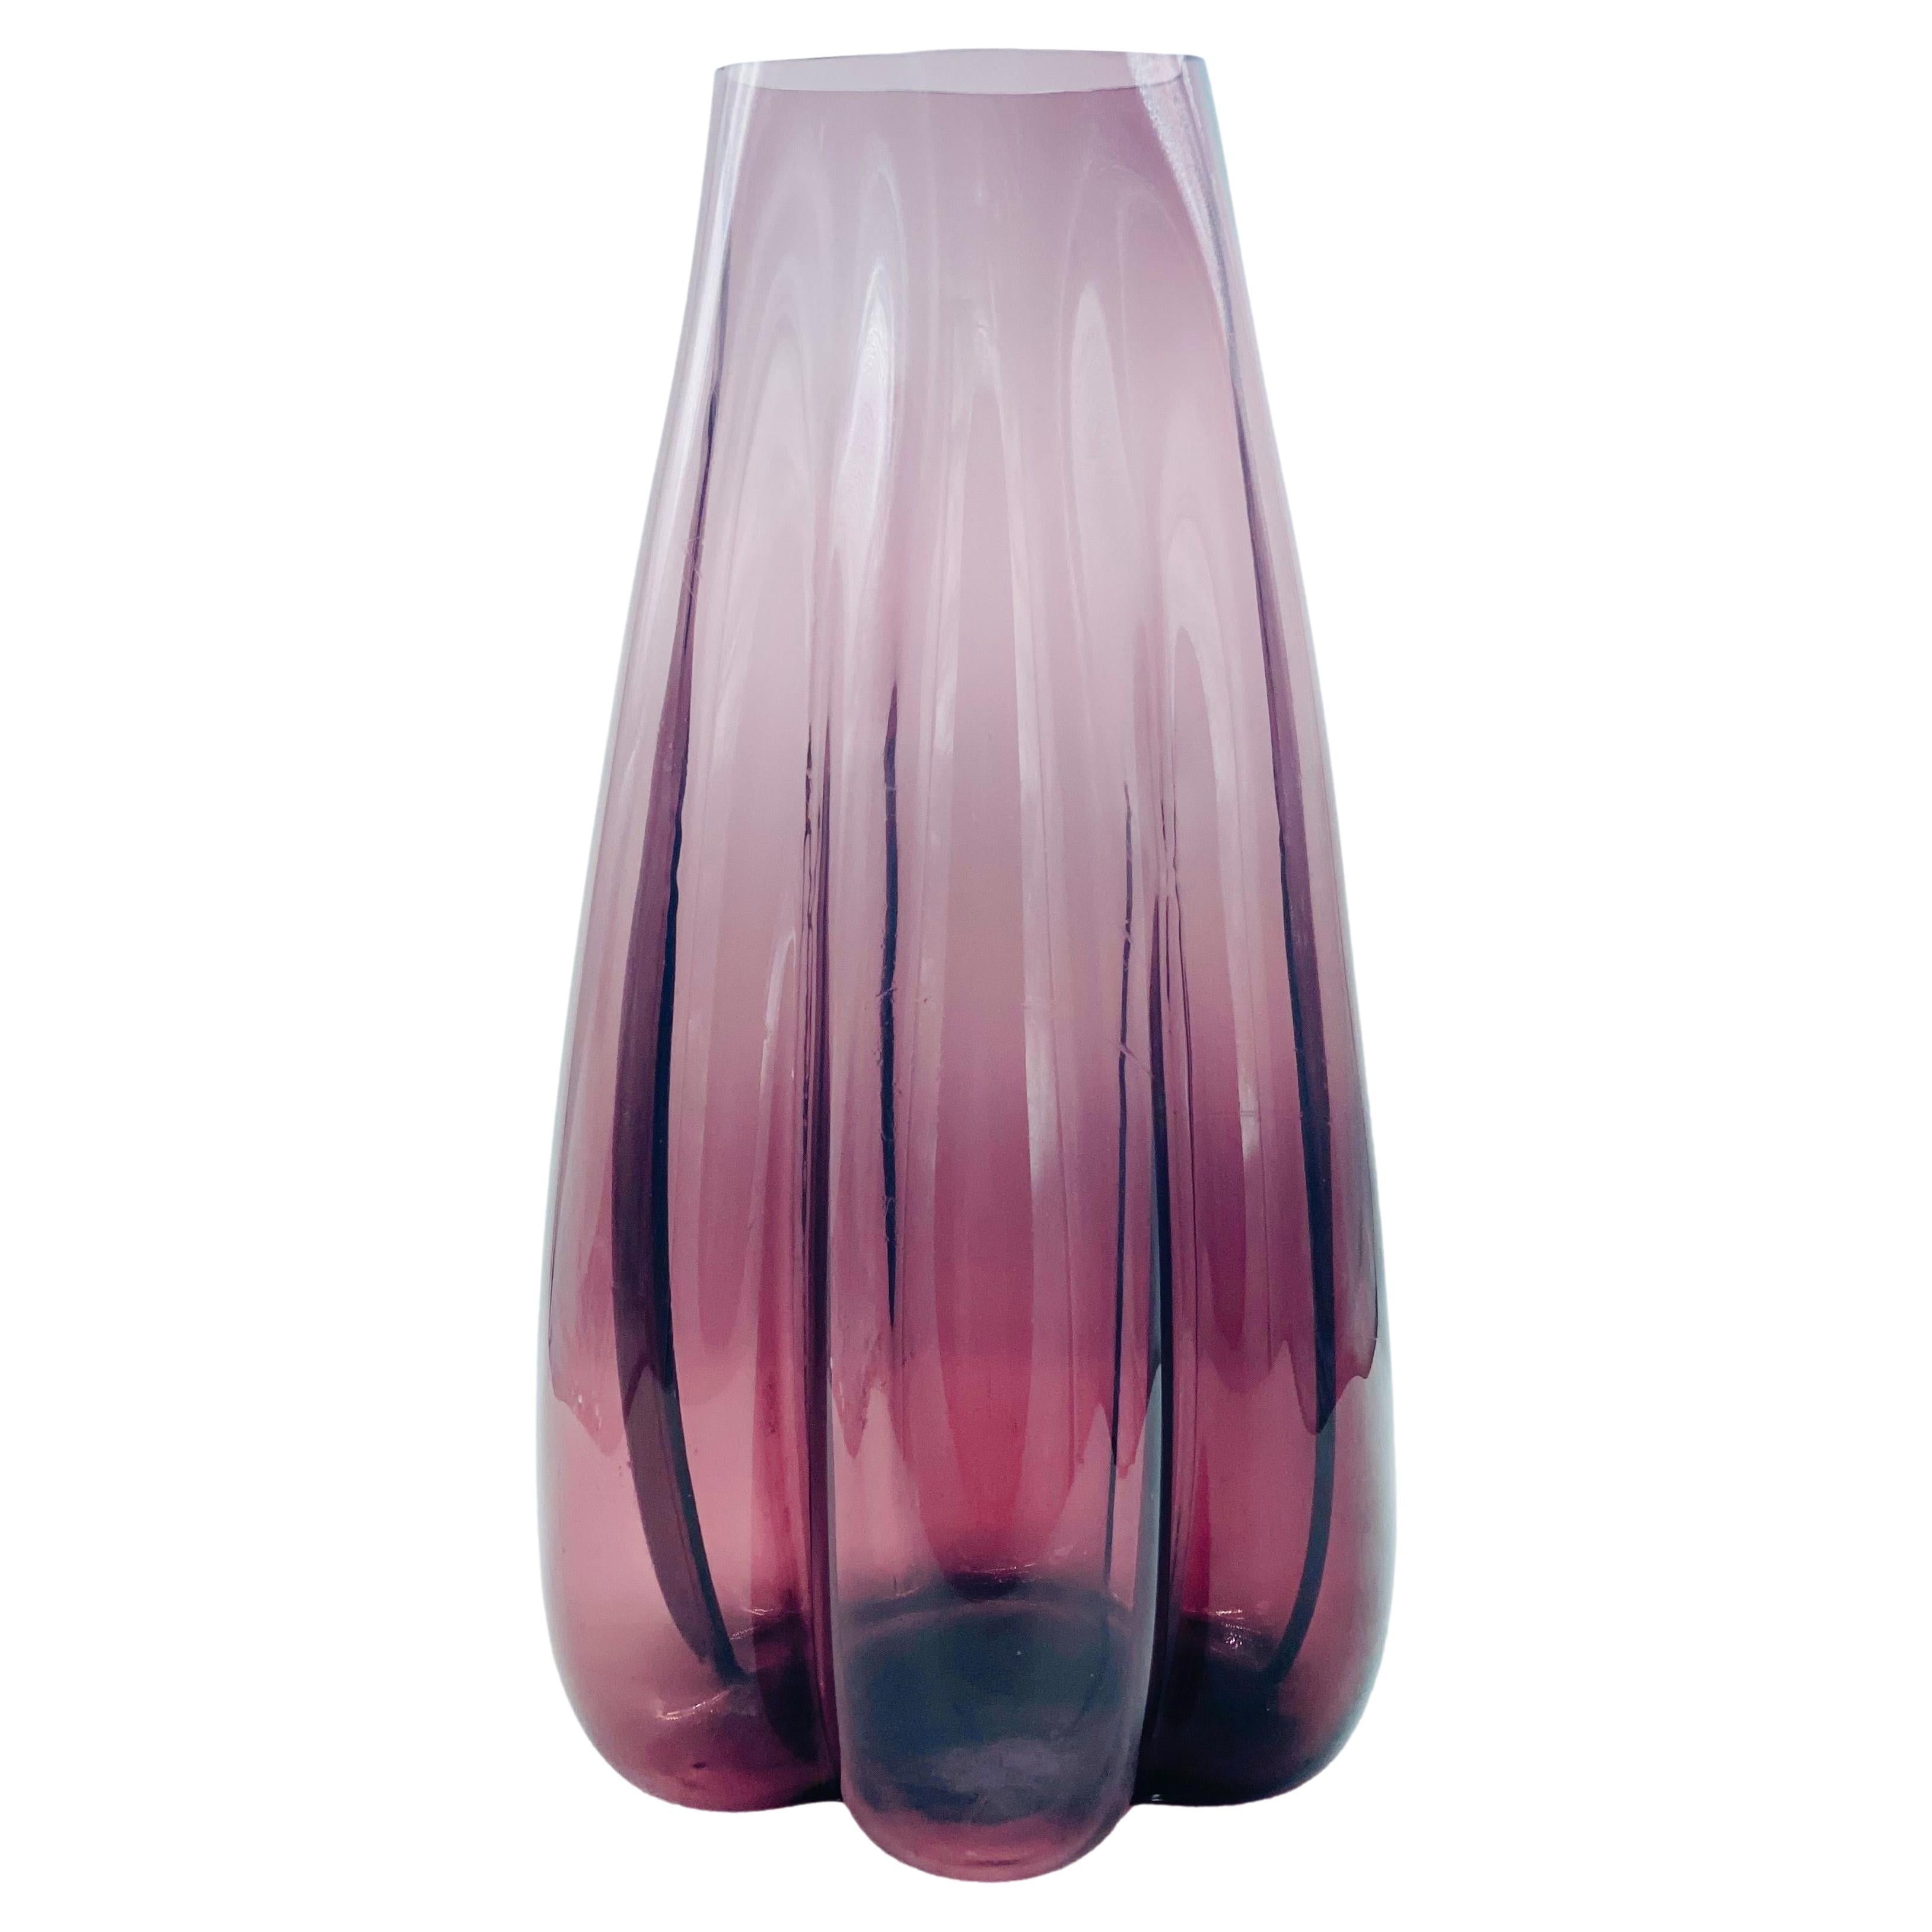 Alessadro Mendini Style Venetian Violet Murano Glass Vase, Italy 1970s